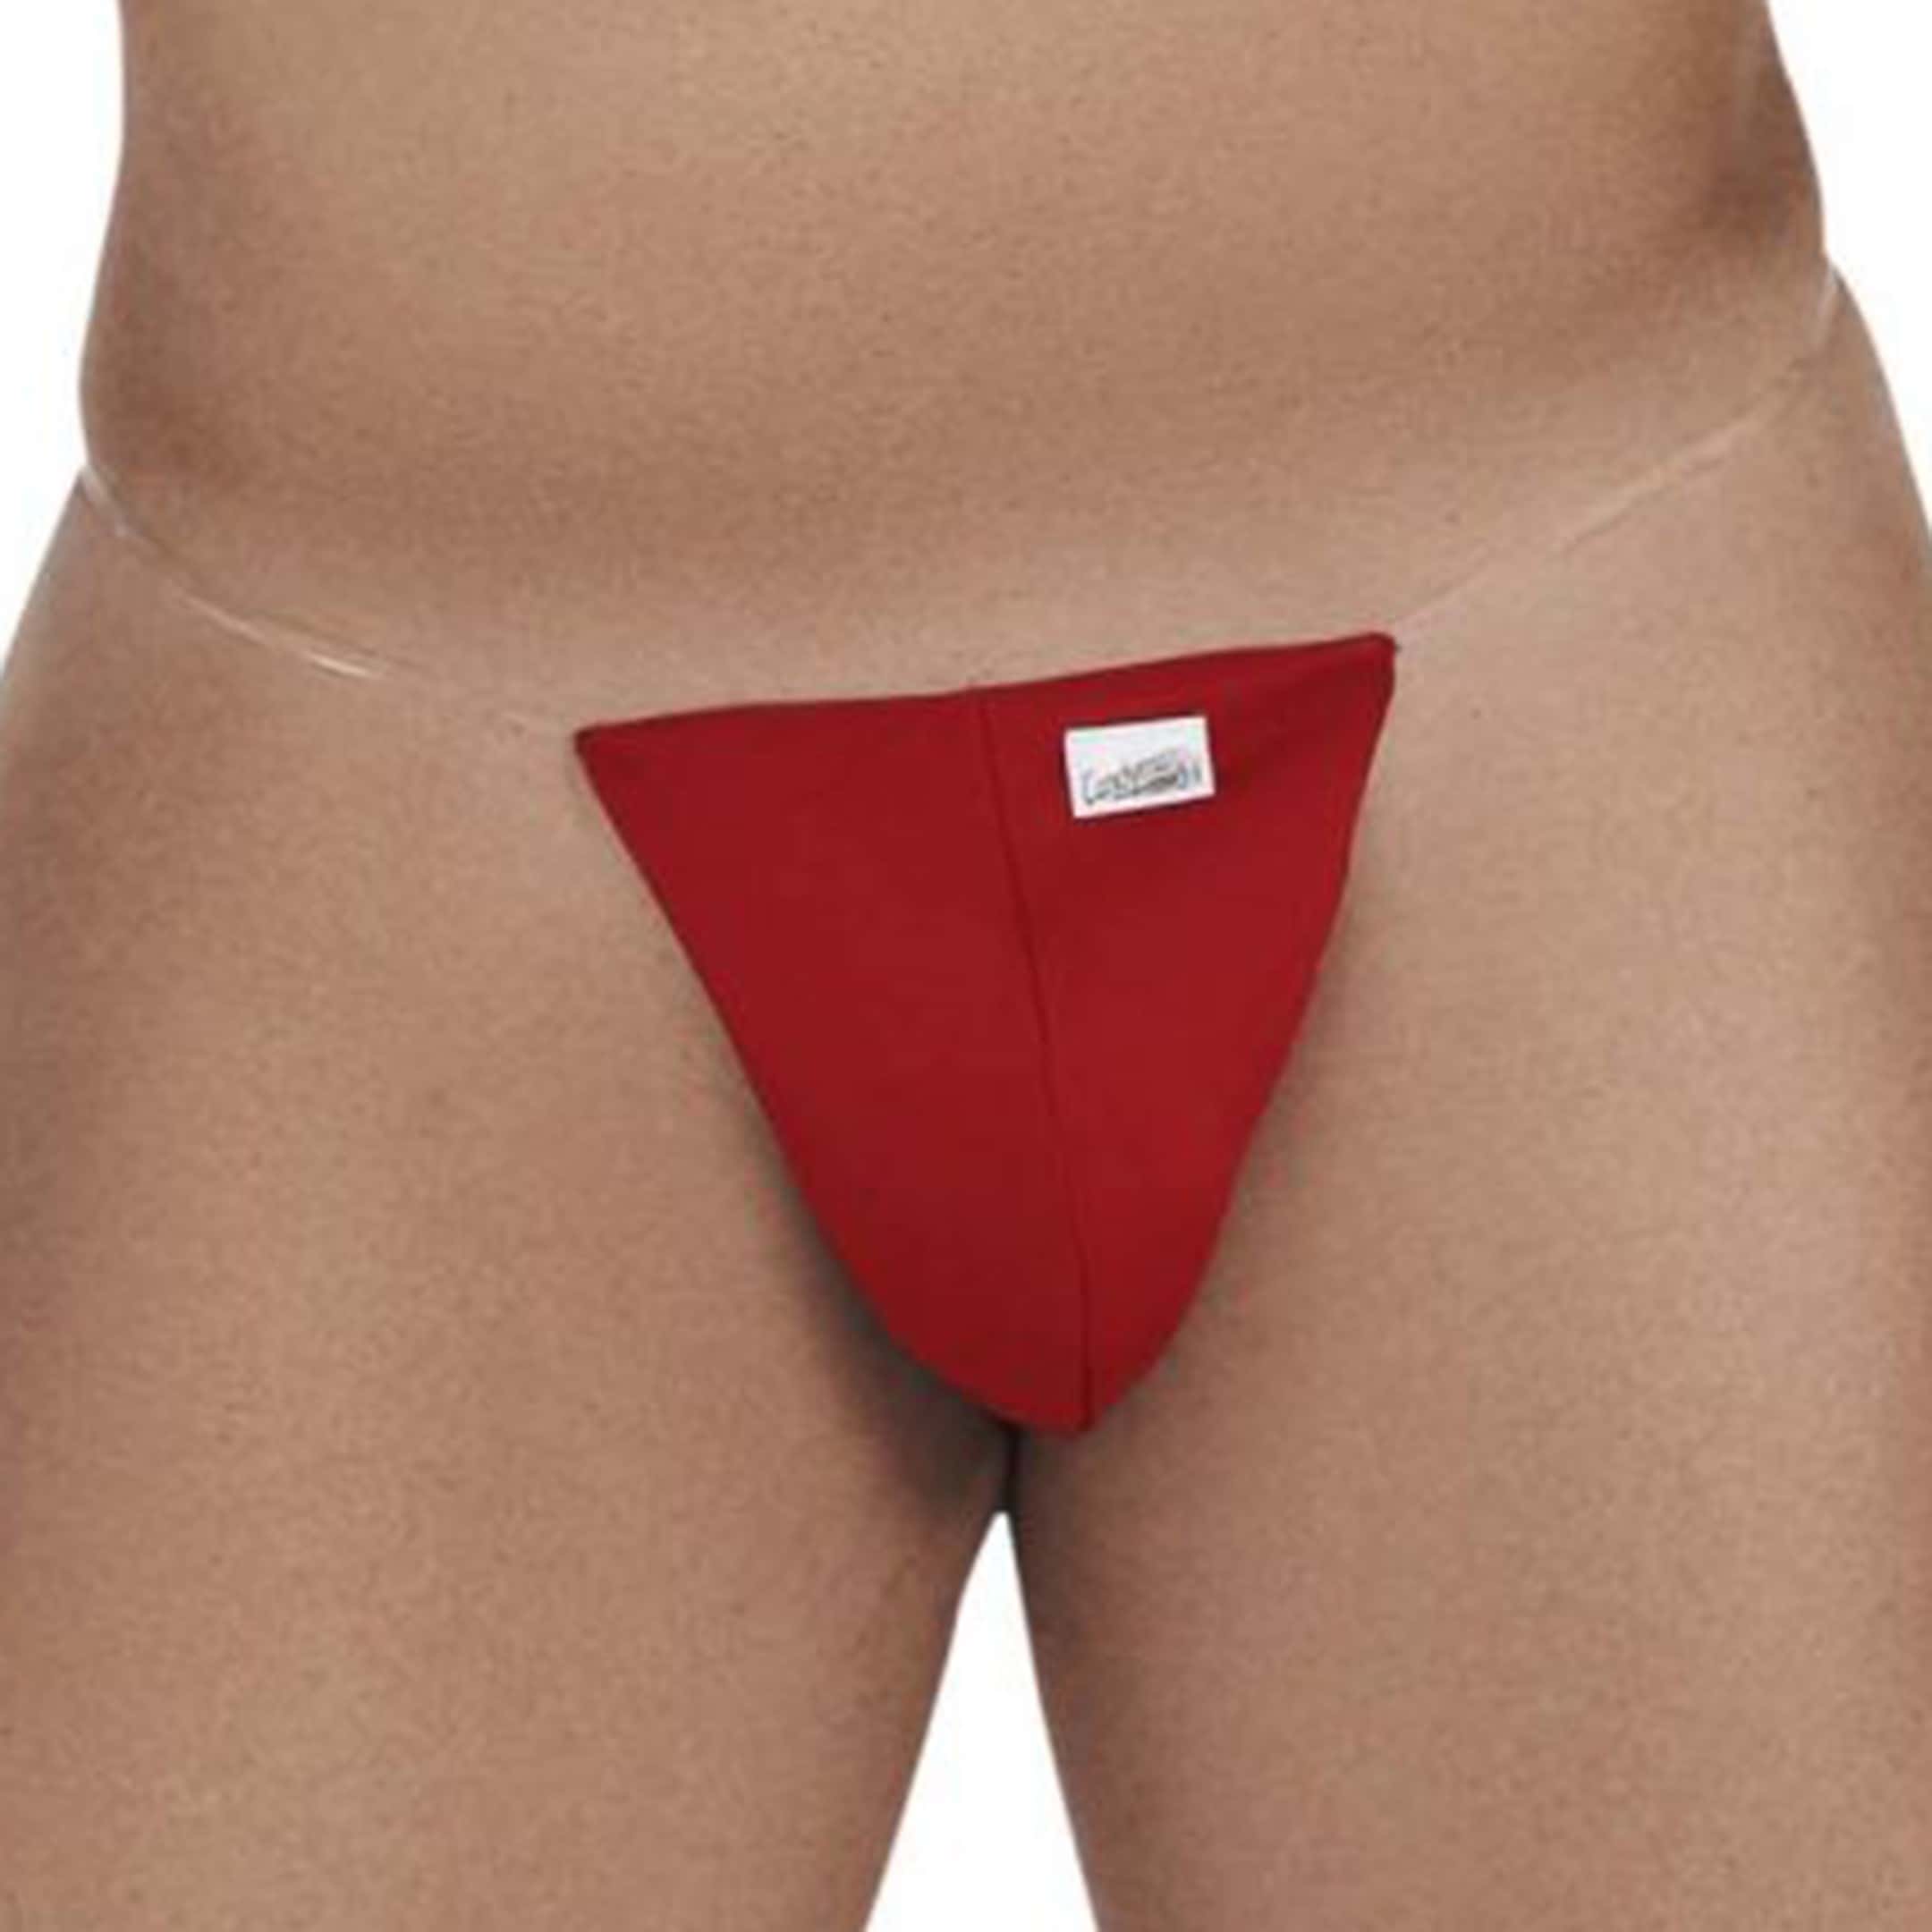 Strap On Harness Pants Strapless Underwear for Men UAE